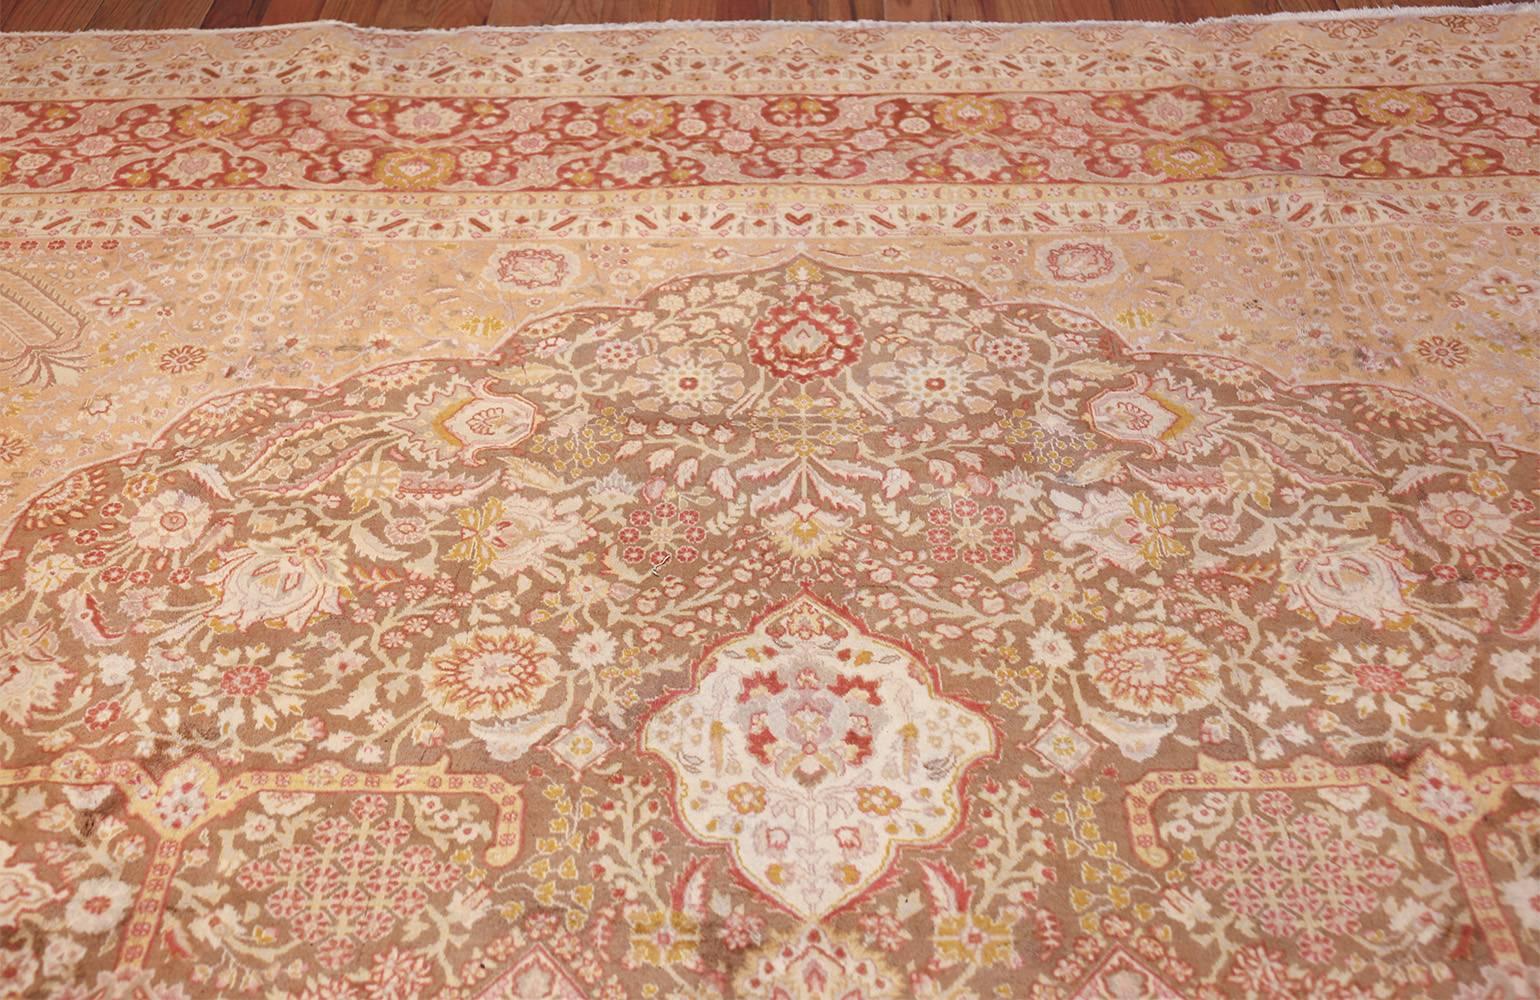 Vintage Room Sized Persian Tabriz Carpet. Size: 9 ft 9 in x 13 ft 7